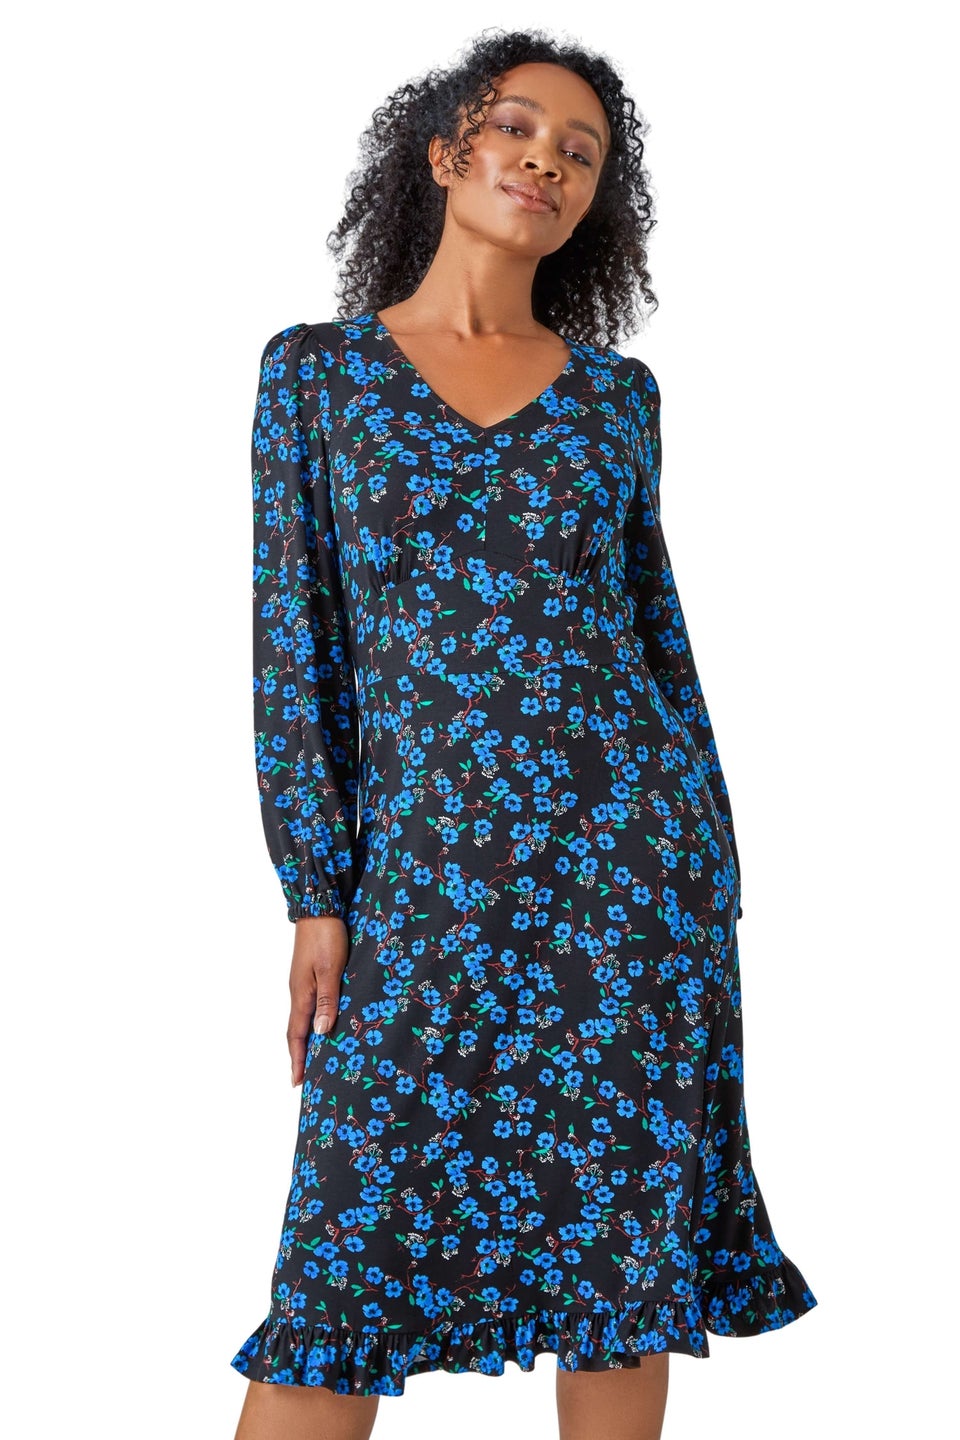 Roman Petite Blue Floral Print Stretch Dress